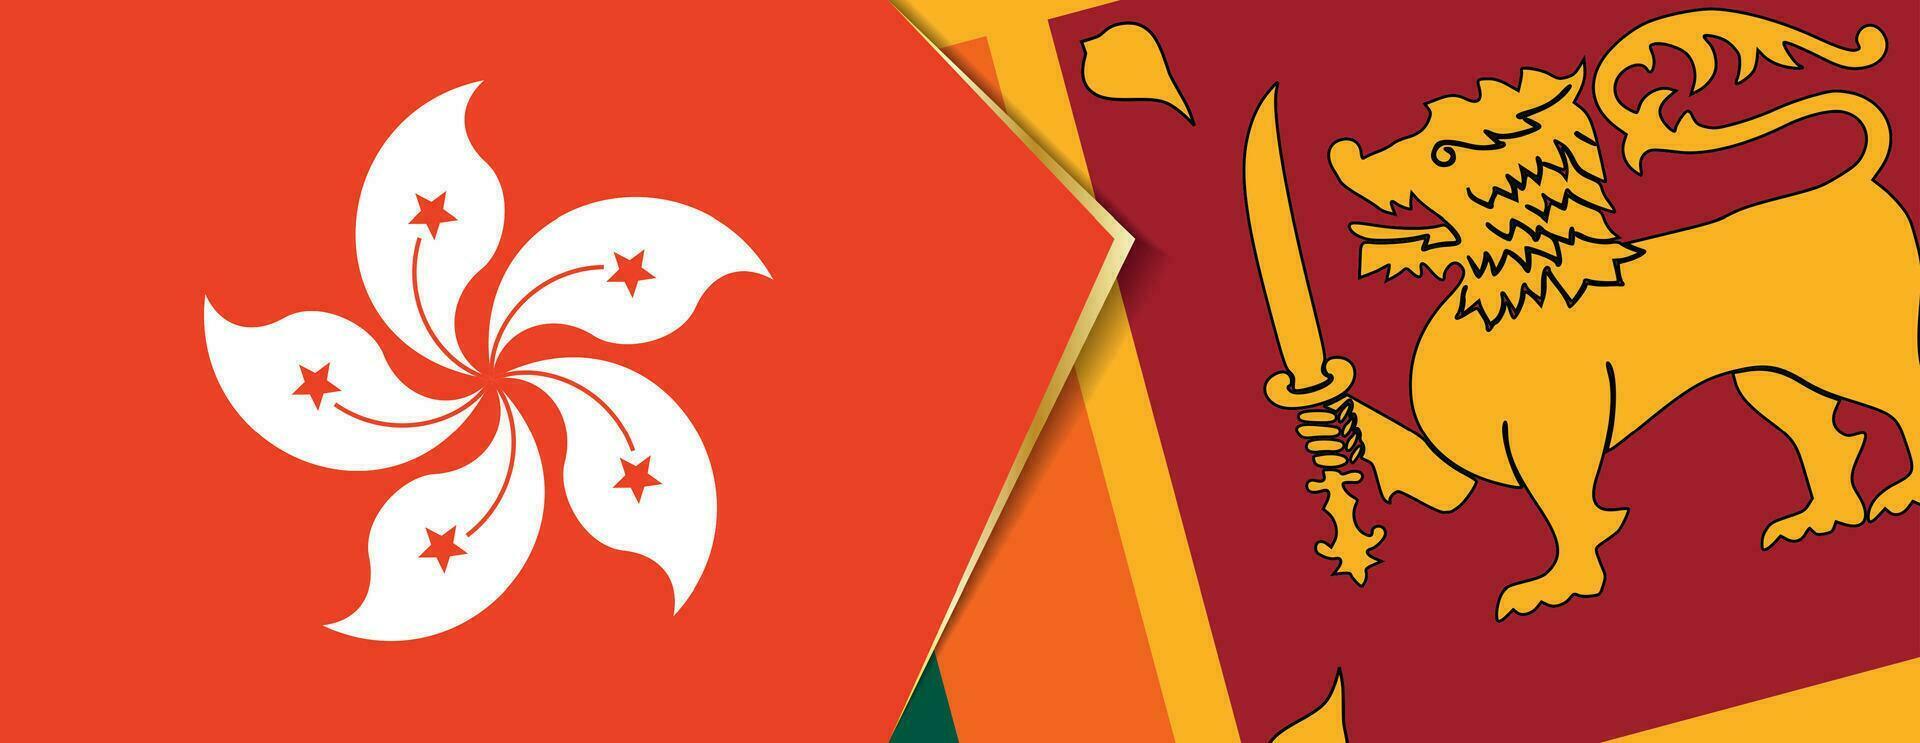 Hong Kong and Sri Lanka flags, two vector flags.